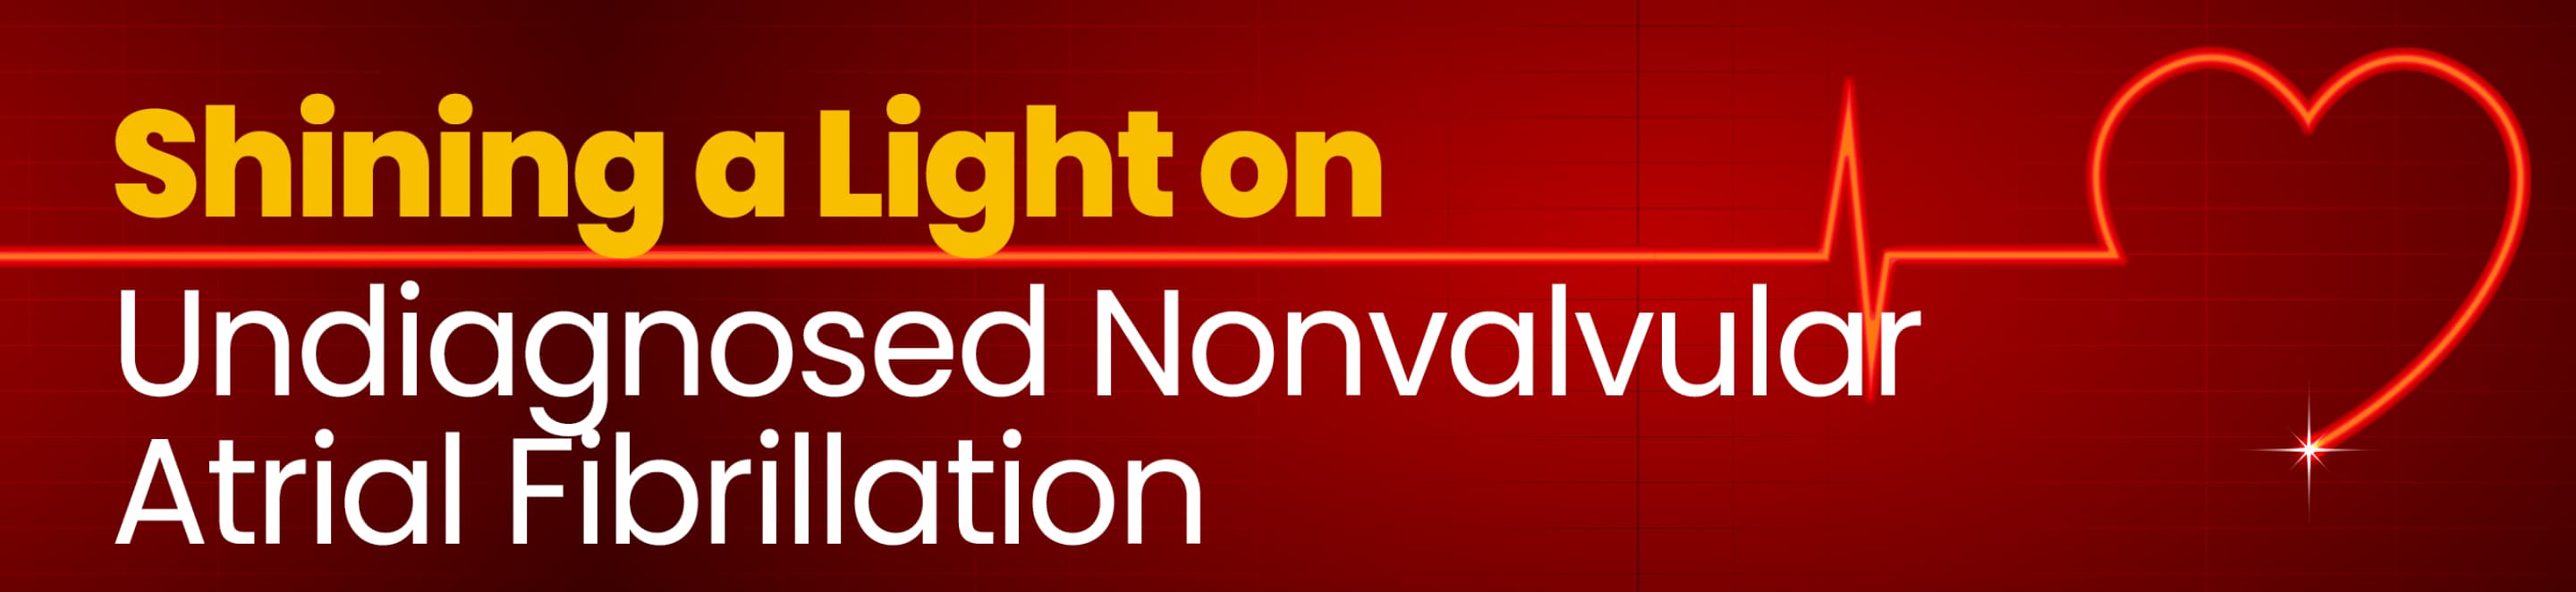 Shining a light on undiagnosed nonvalvular atrial fibrillation